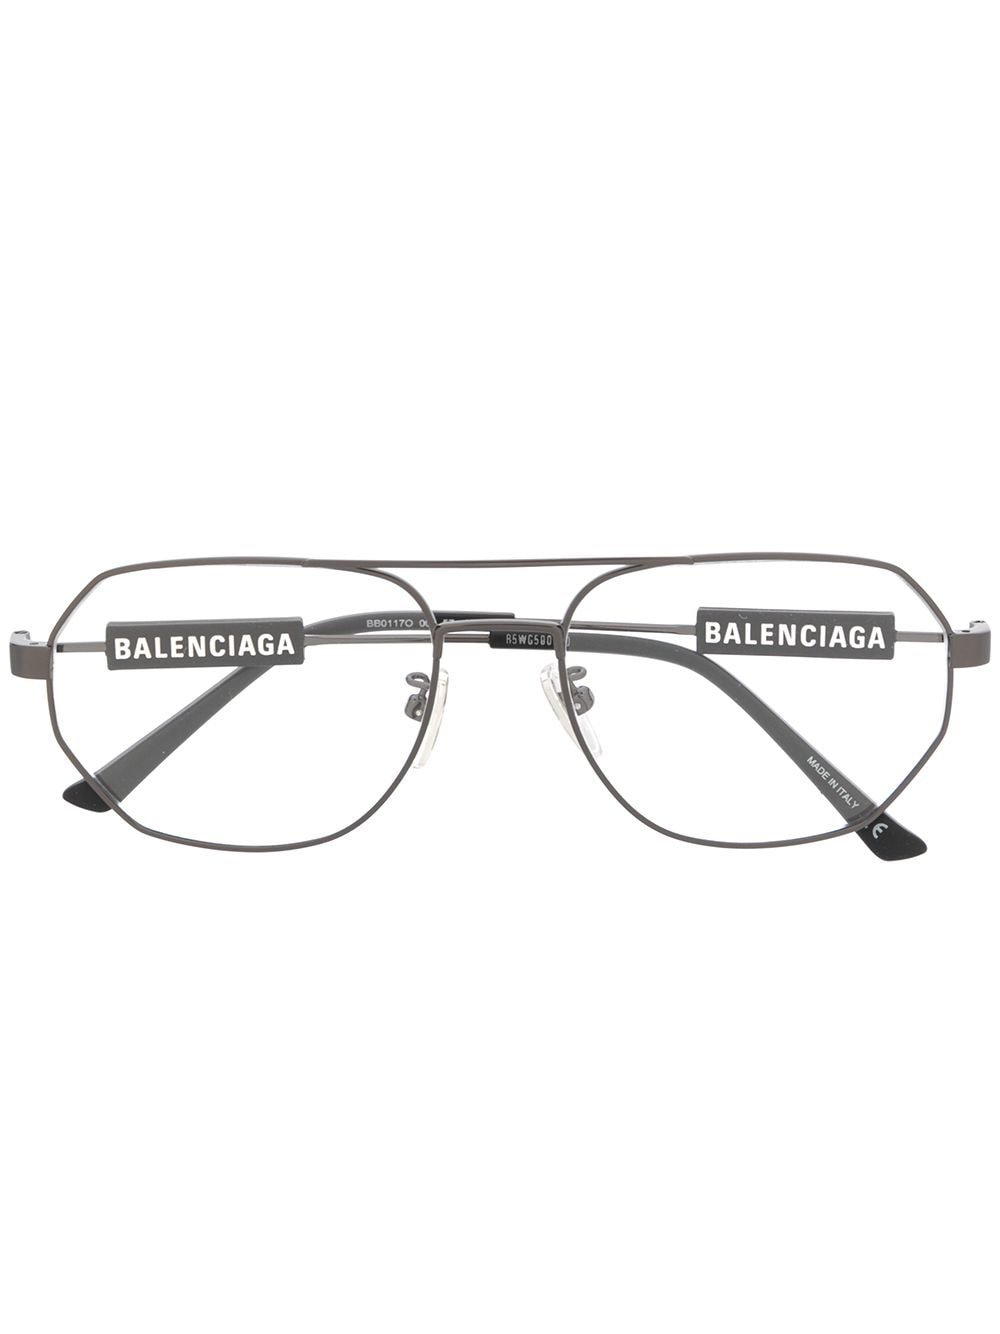 BALENCIAGA  CATEYE OPTICAL GLASSES BLACK  la boutique eyewear